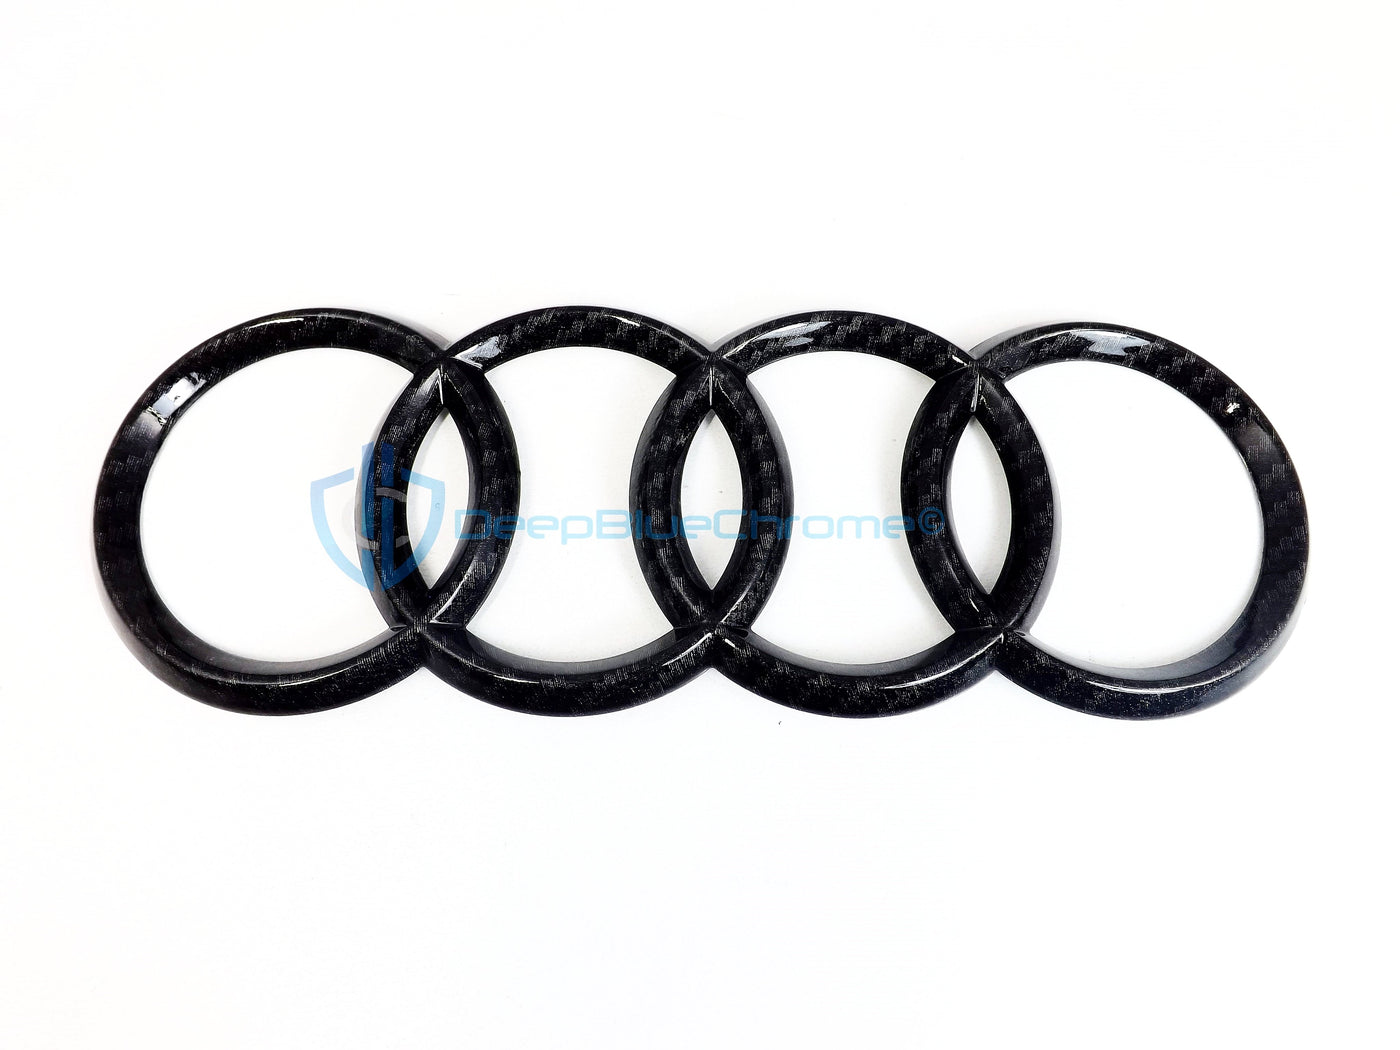 Audi A3 Carbon Fiber Rings 11-13 Rear Trunk Emblem R8 14-15 Front Badge OEM